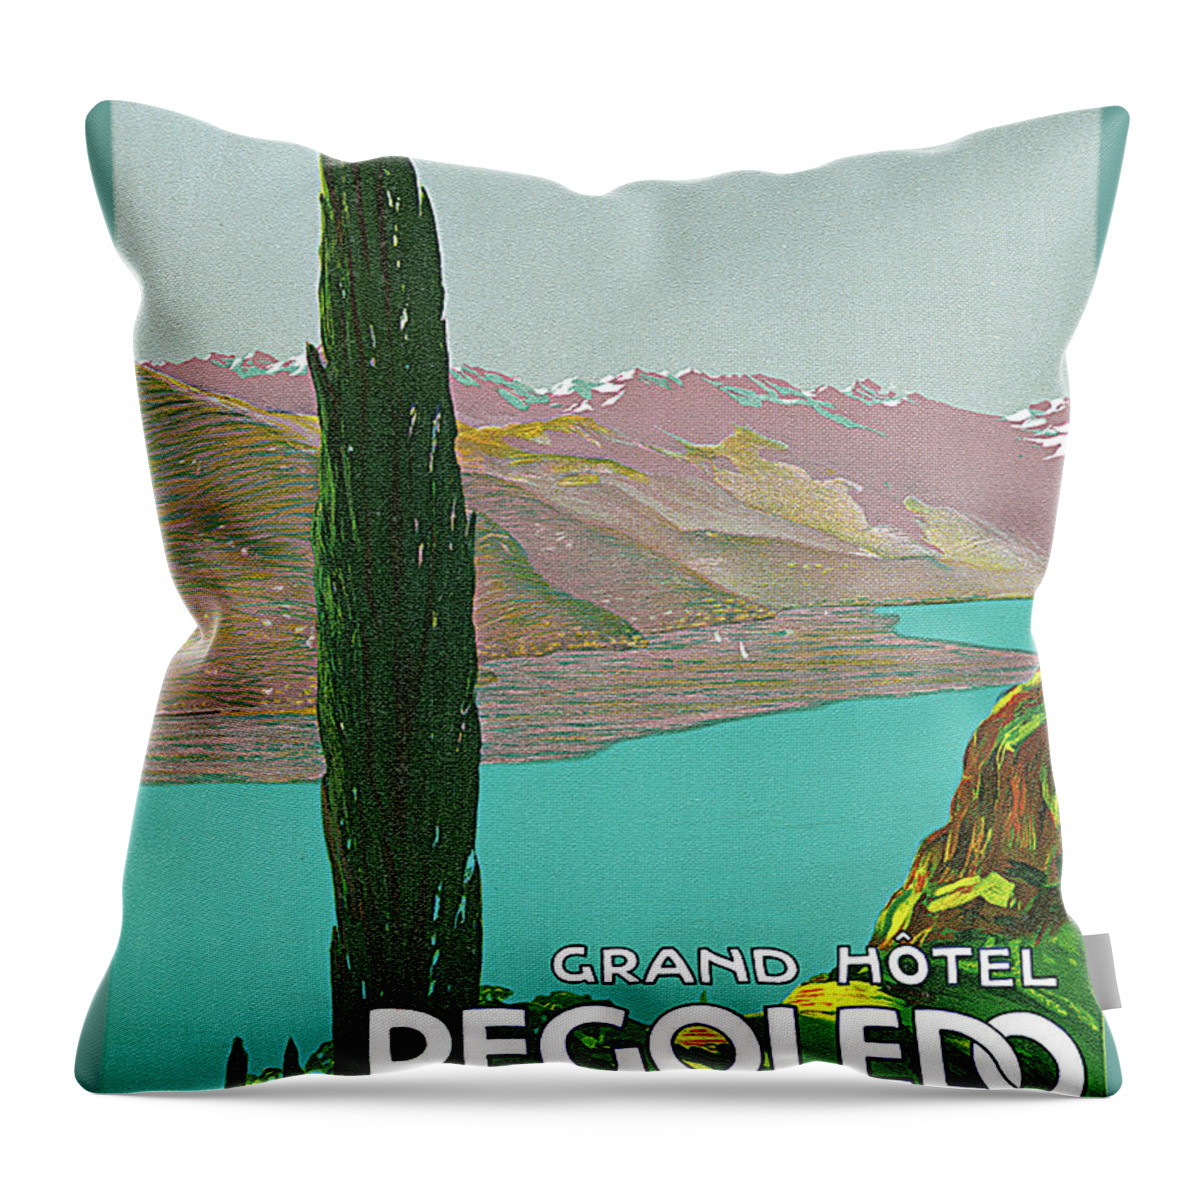 Grand Hotel Regoledo Throw Pillow featuring the photograph Grand Hotel Regoledo by Aldo Mazza